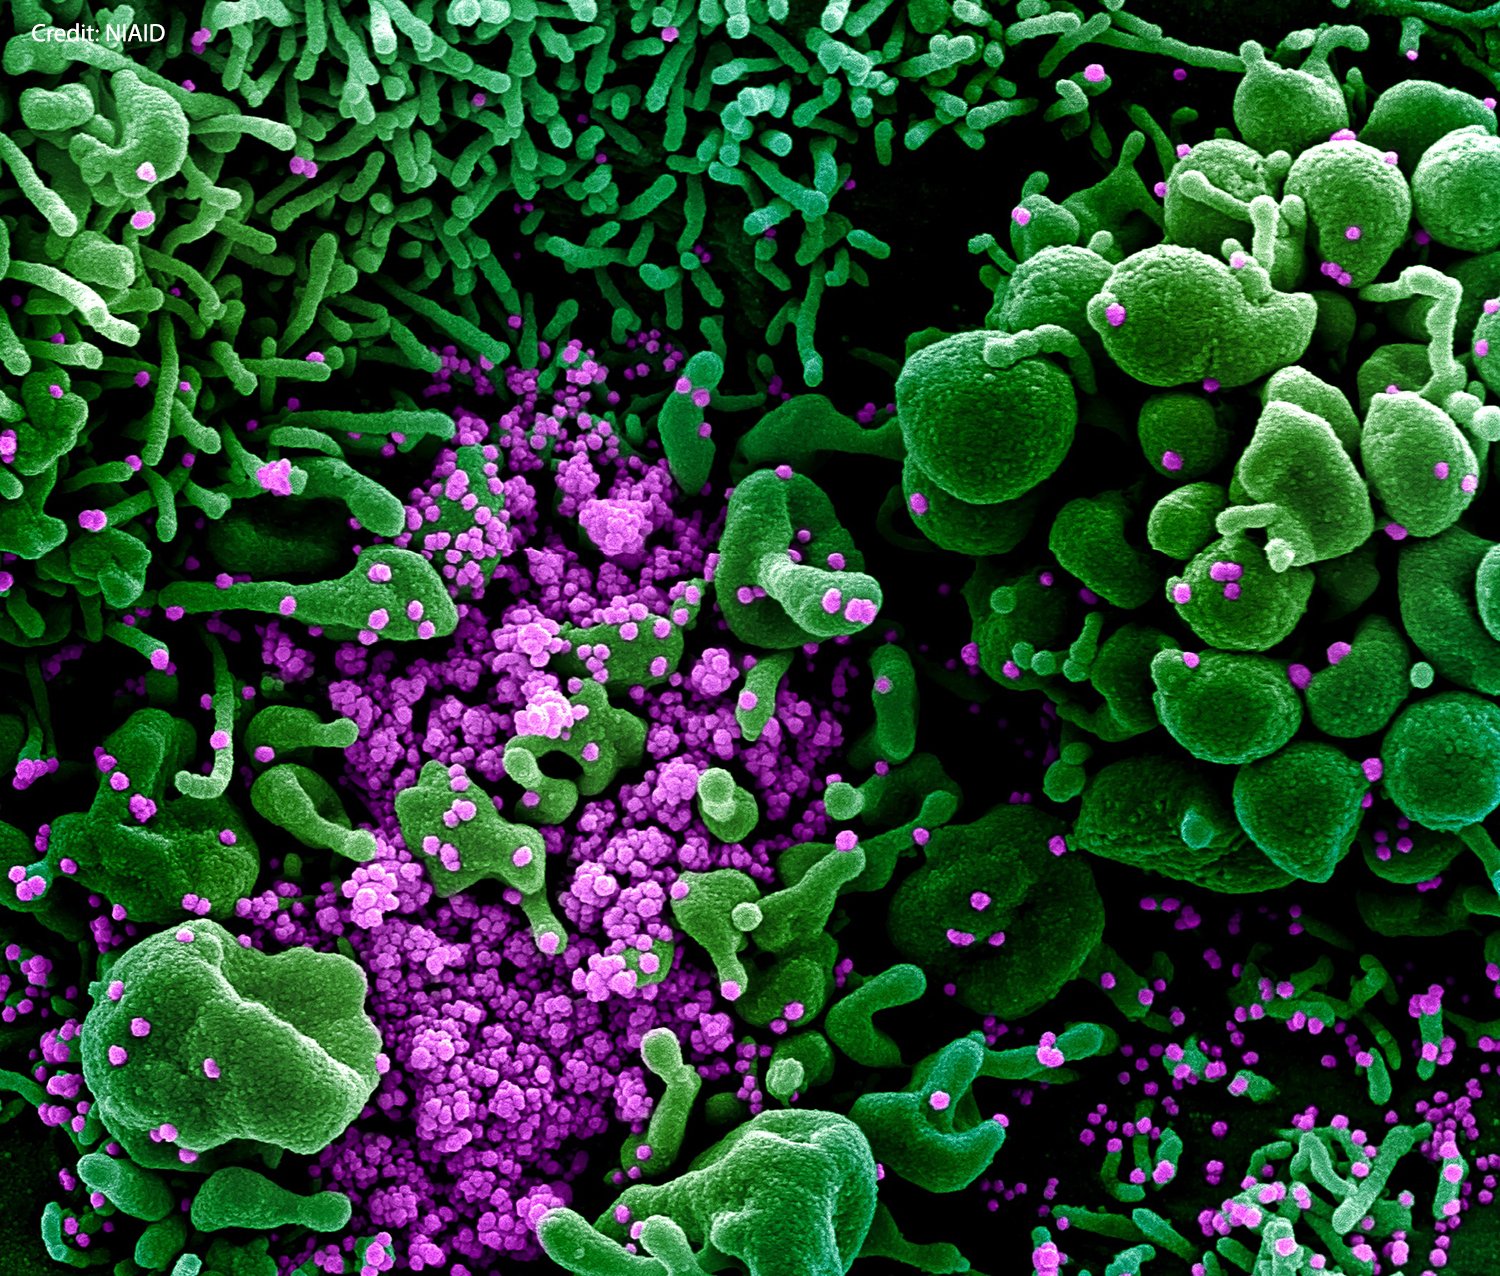 Koronavirus pod elektronovým mikroskopem, Stroj: NIAID